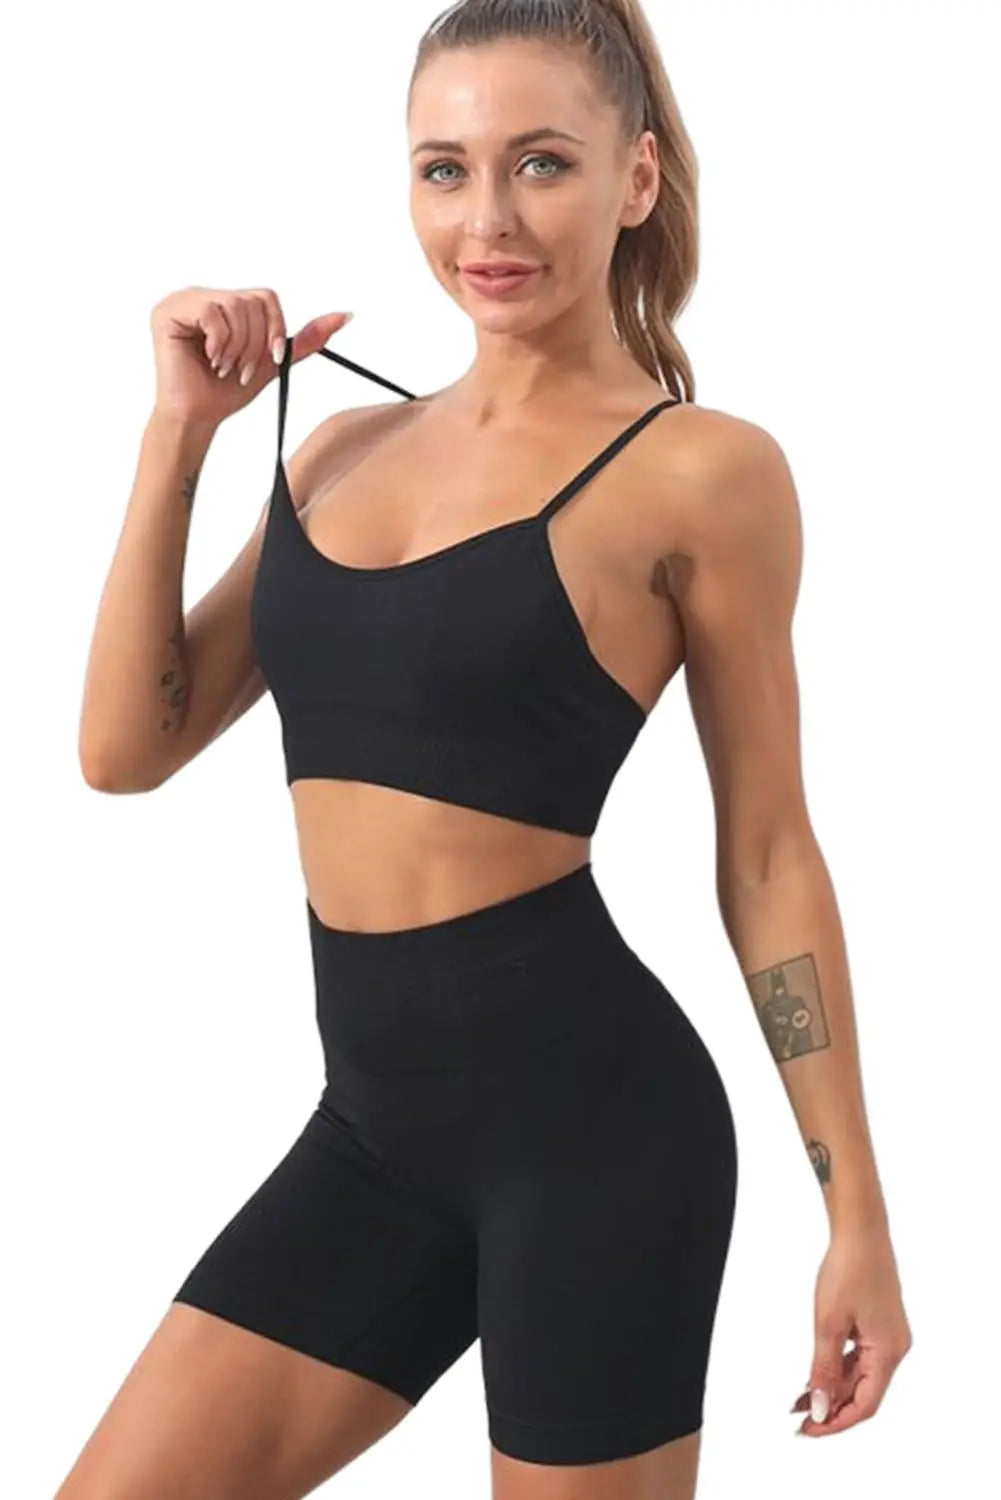 Black spaghetti straps seamless yoga short set - activewear